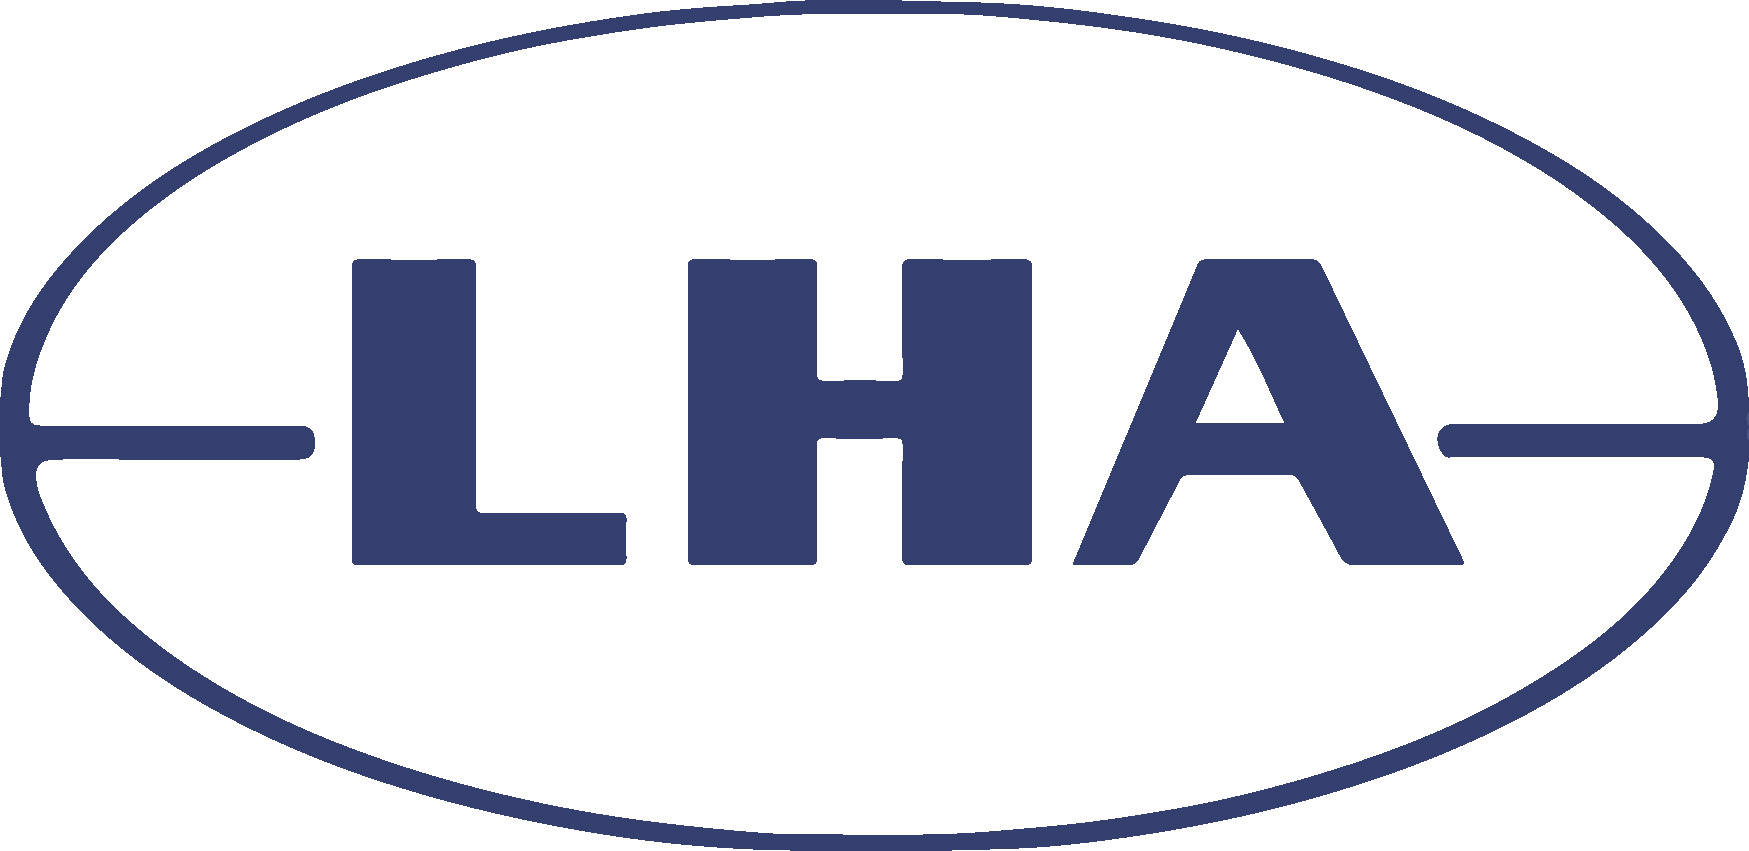 LHA